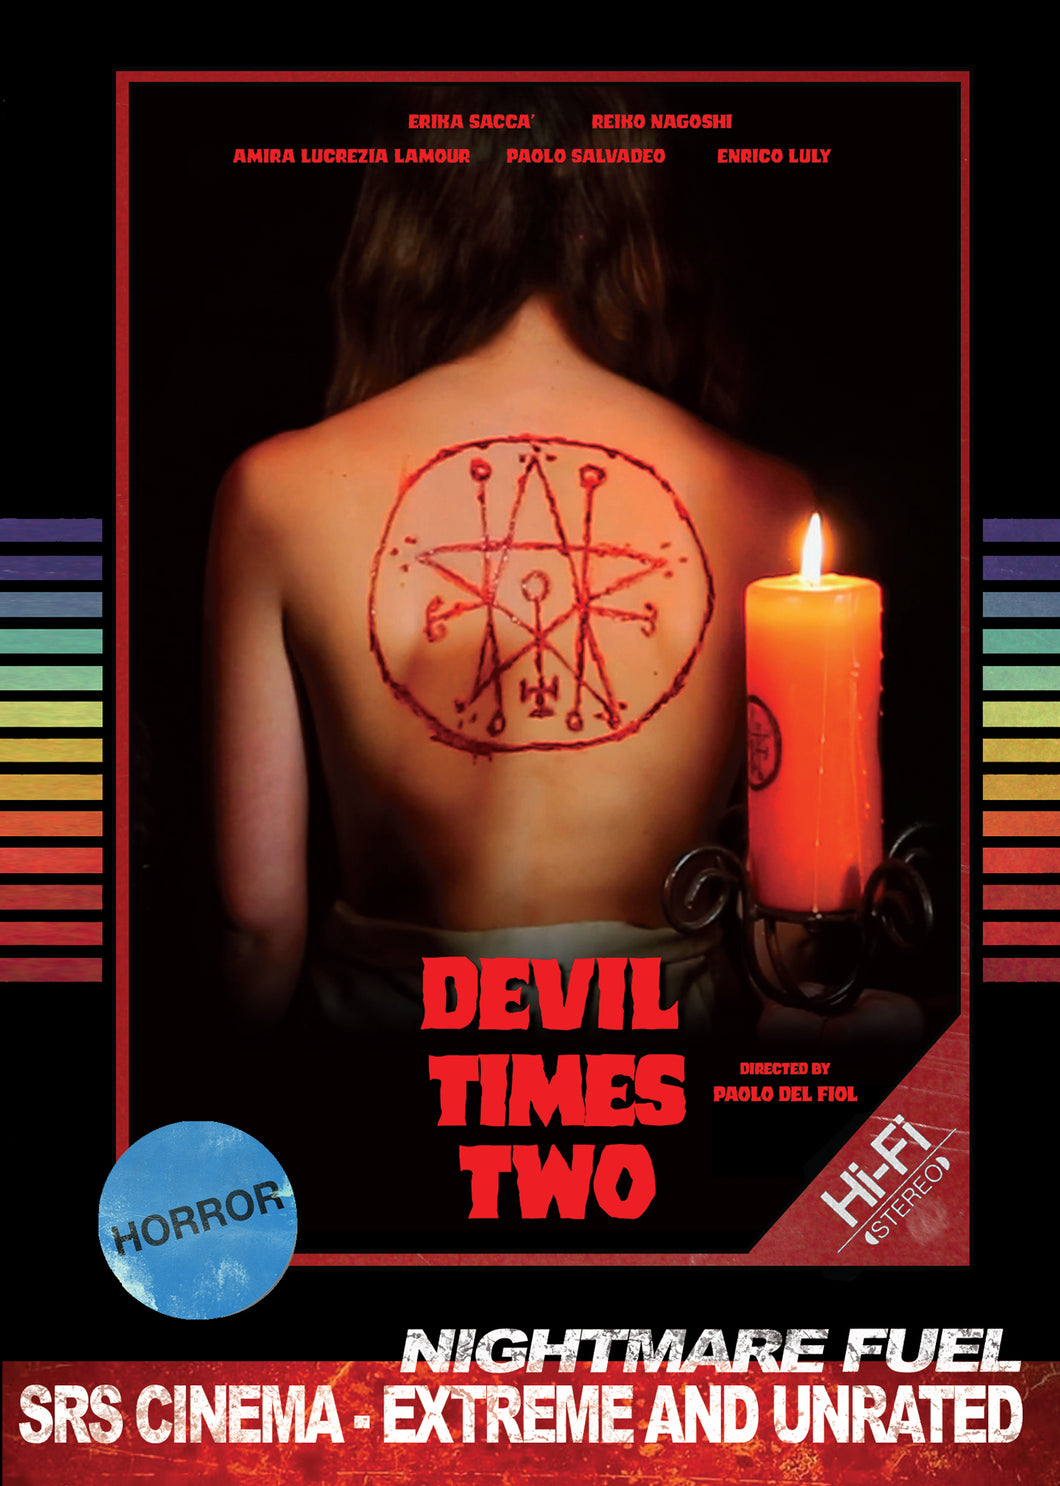 Devil Times Two Retro Nightmare Fuel DVD